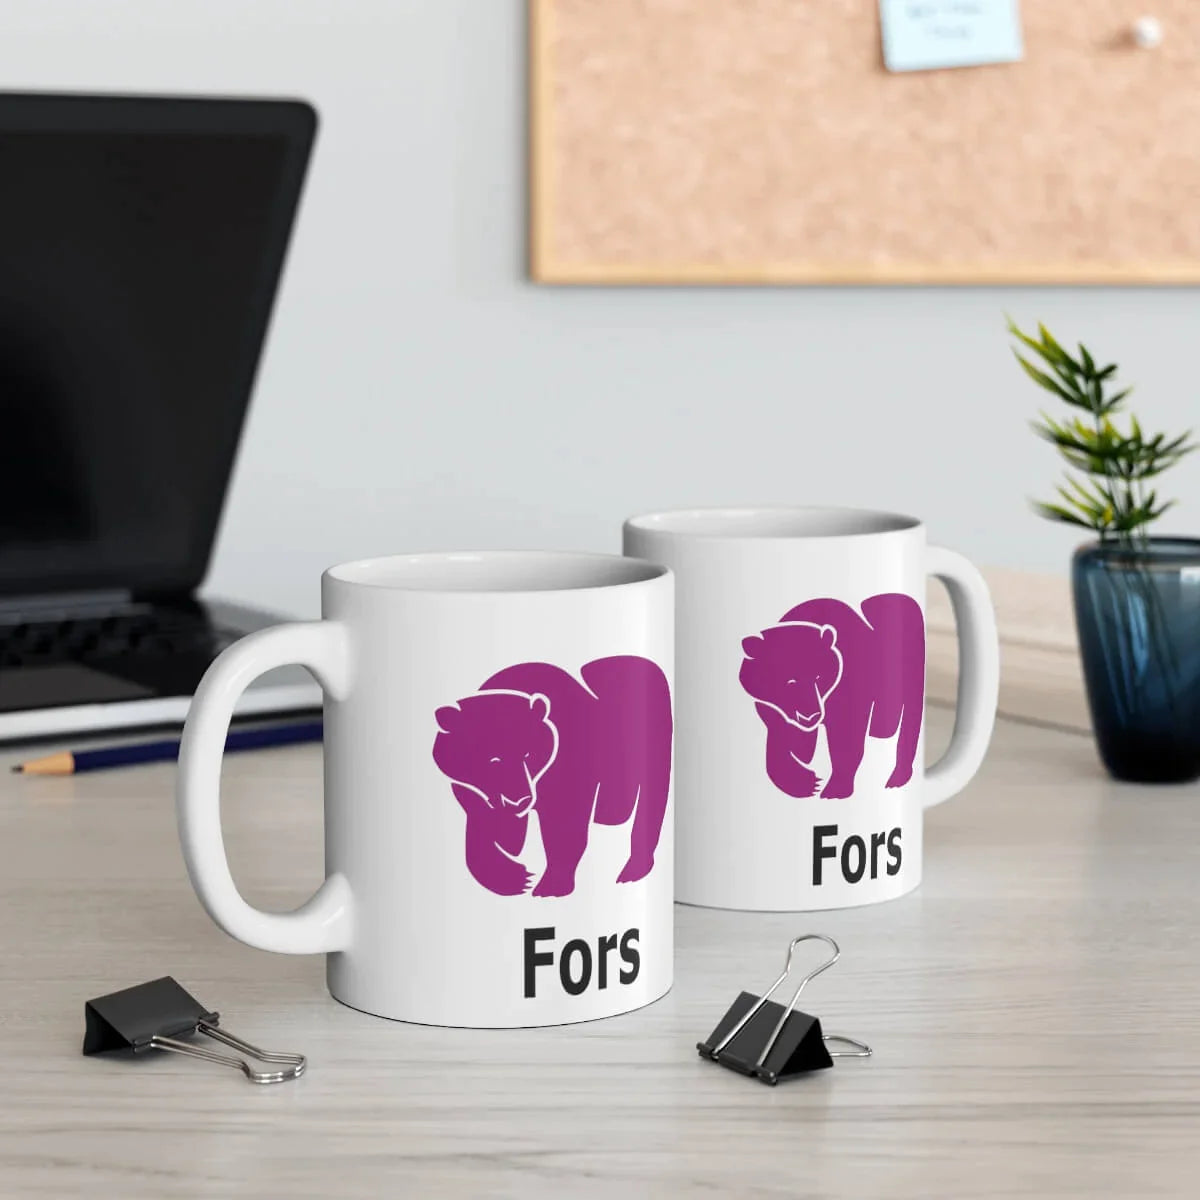 Fors (Courage) Bear Mug